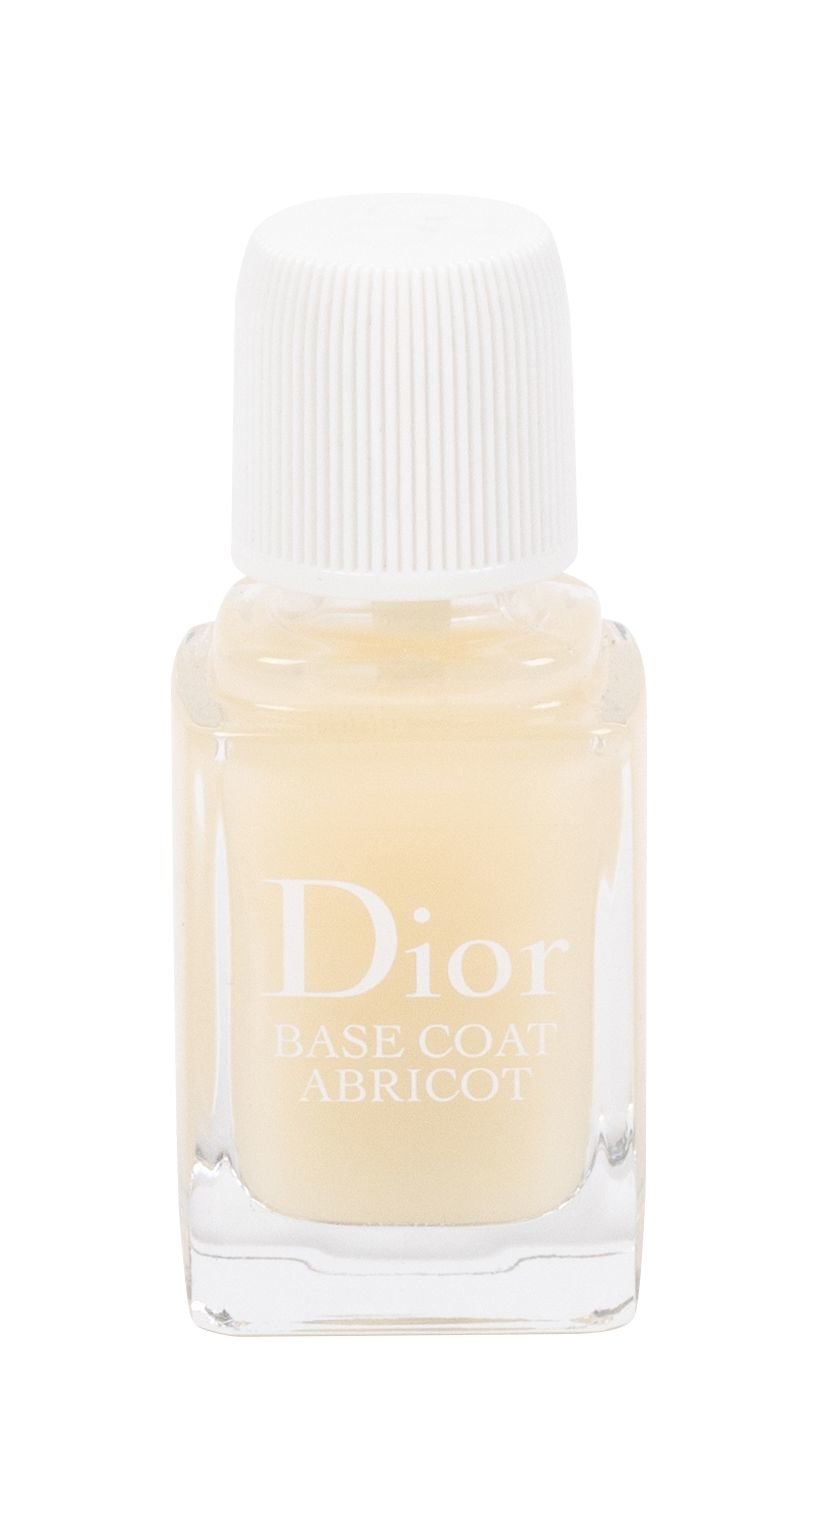 Christian Dior Base Coat Abricot nagų priežiūrai